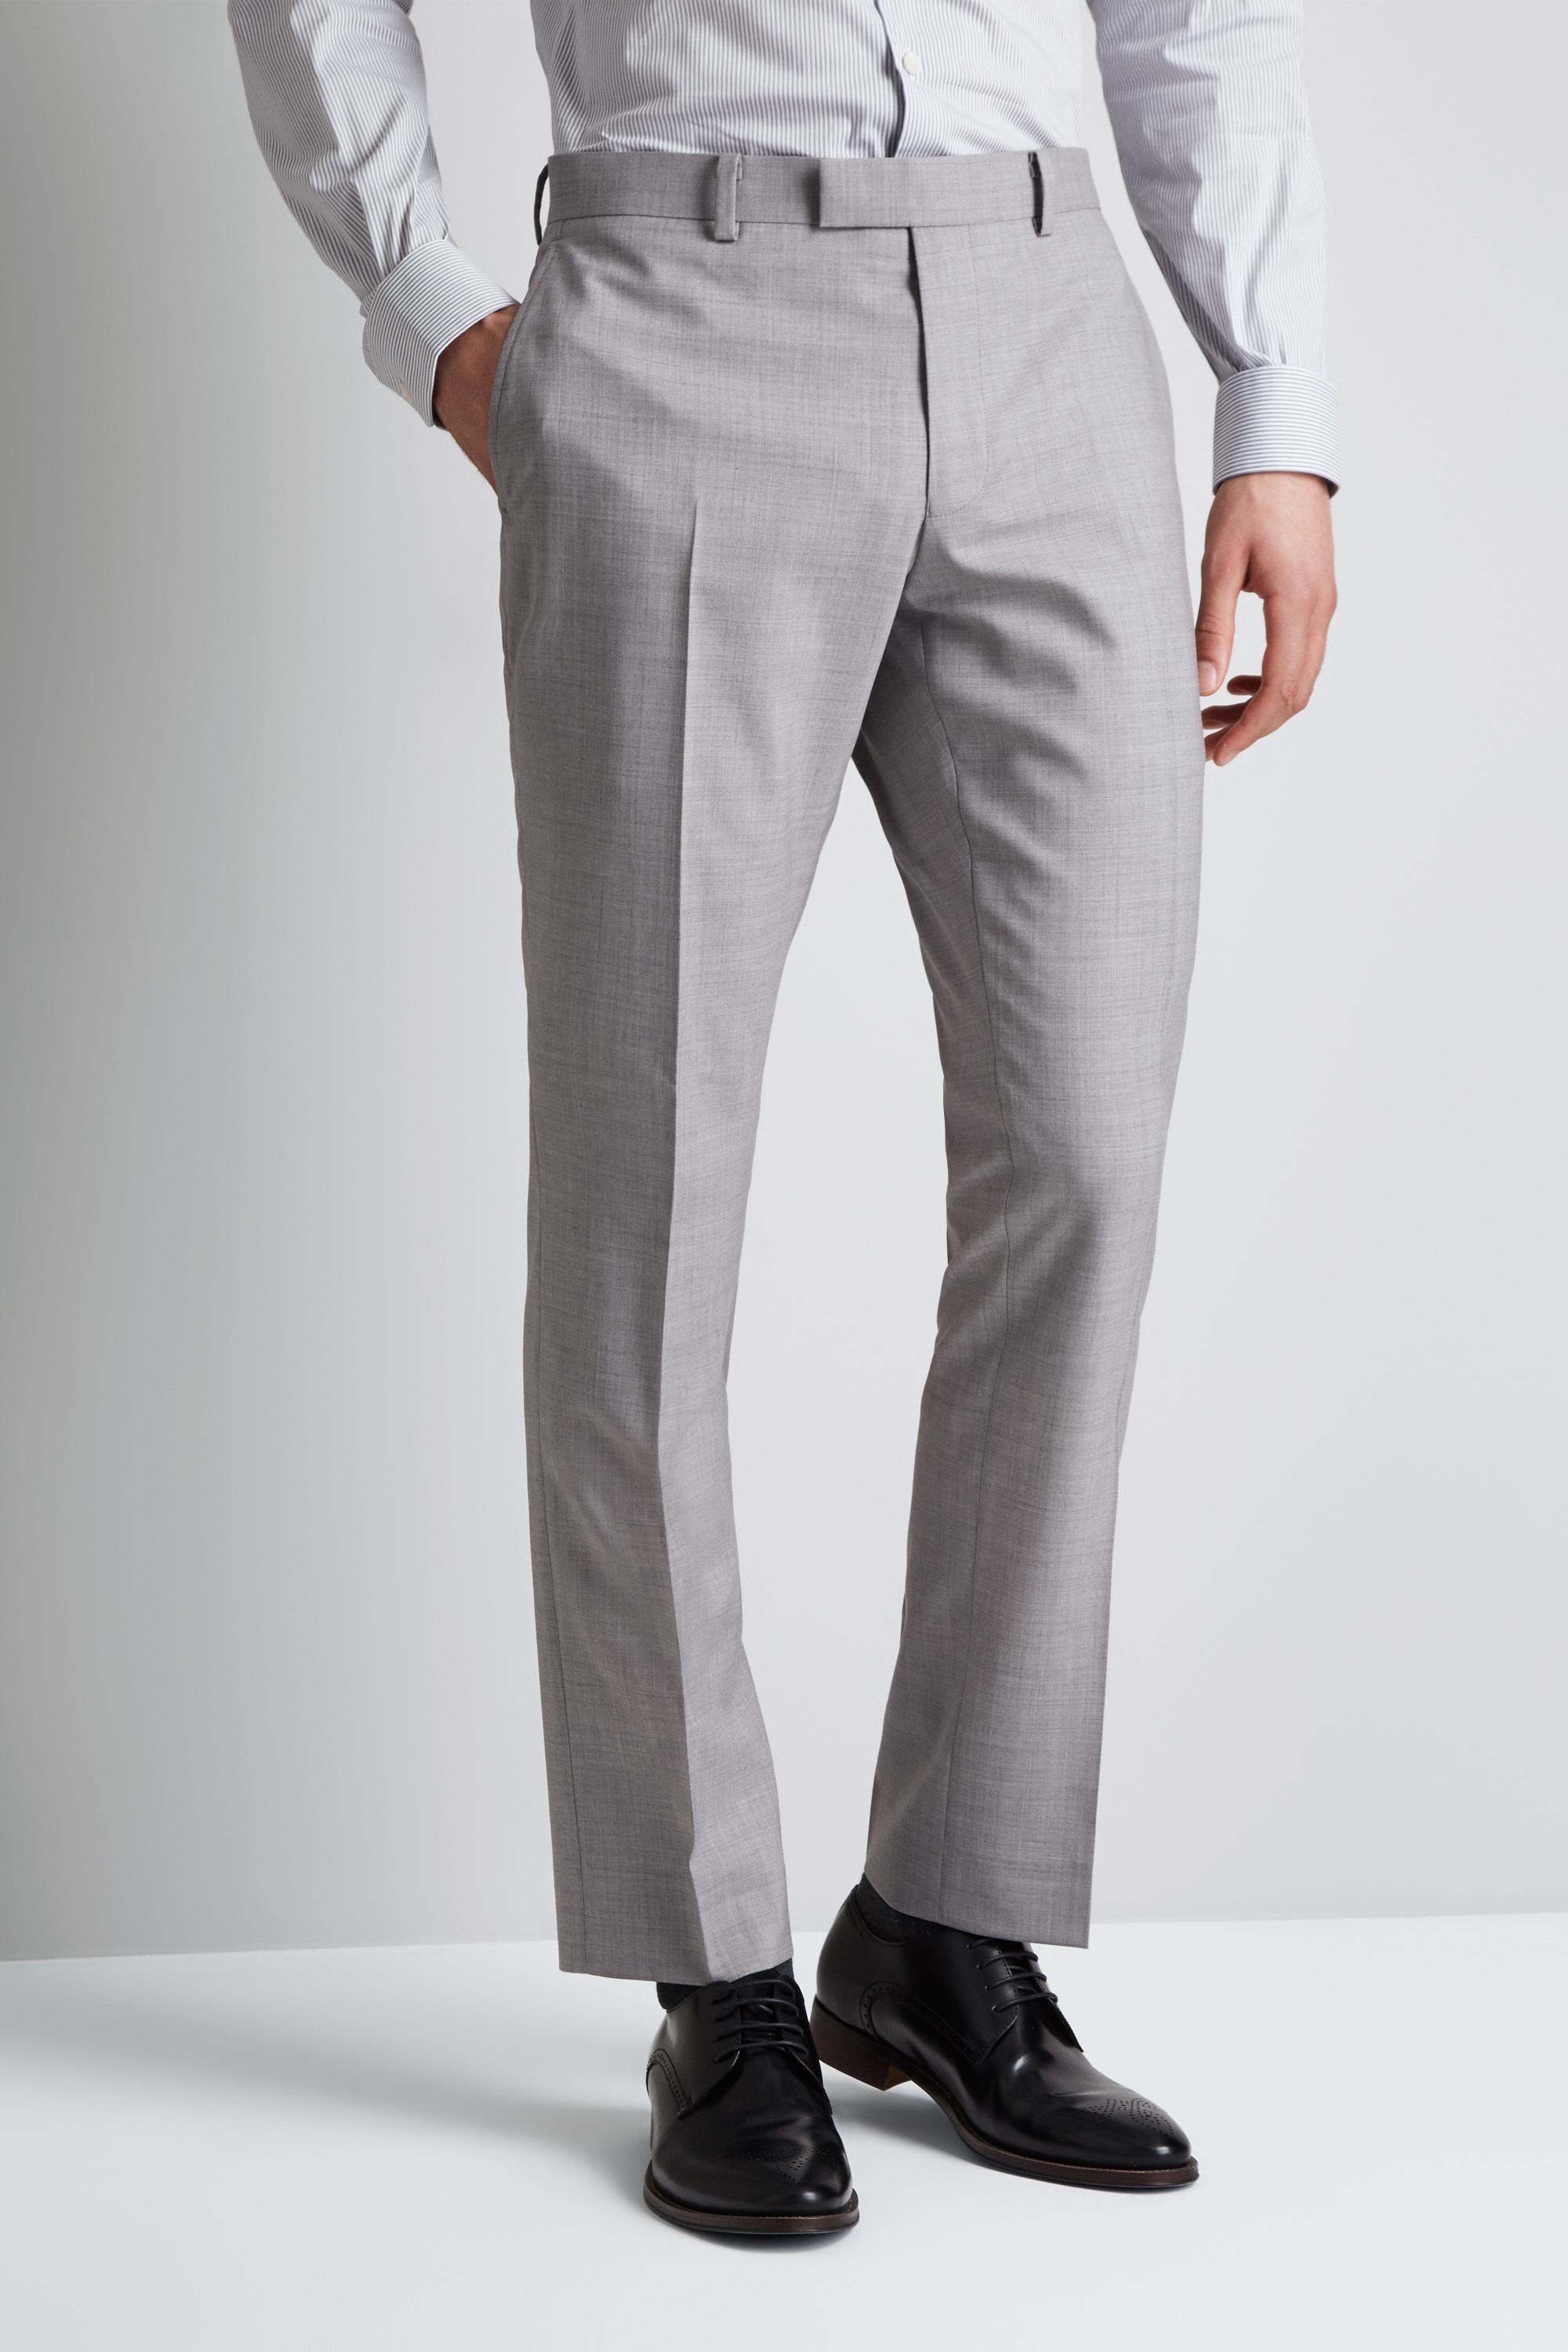 DKNY Wool Slim Fit Light Grey Trousers in Gray for Men - Lyst